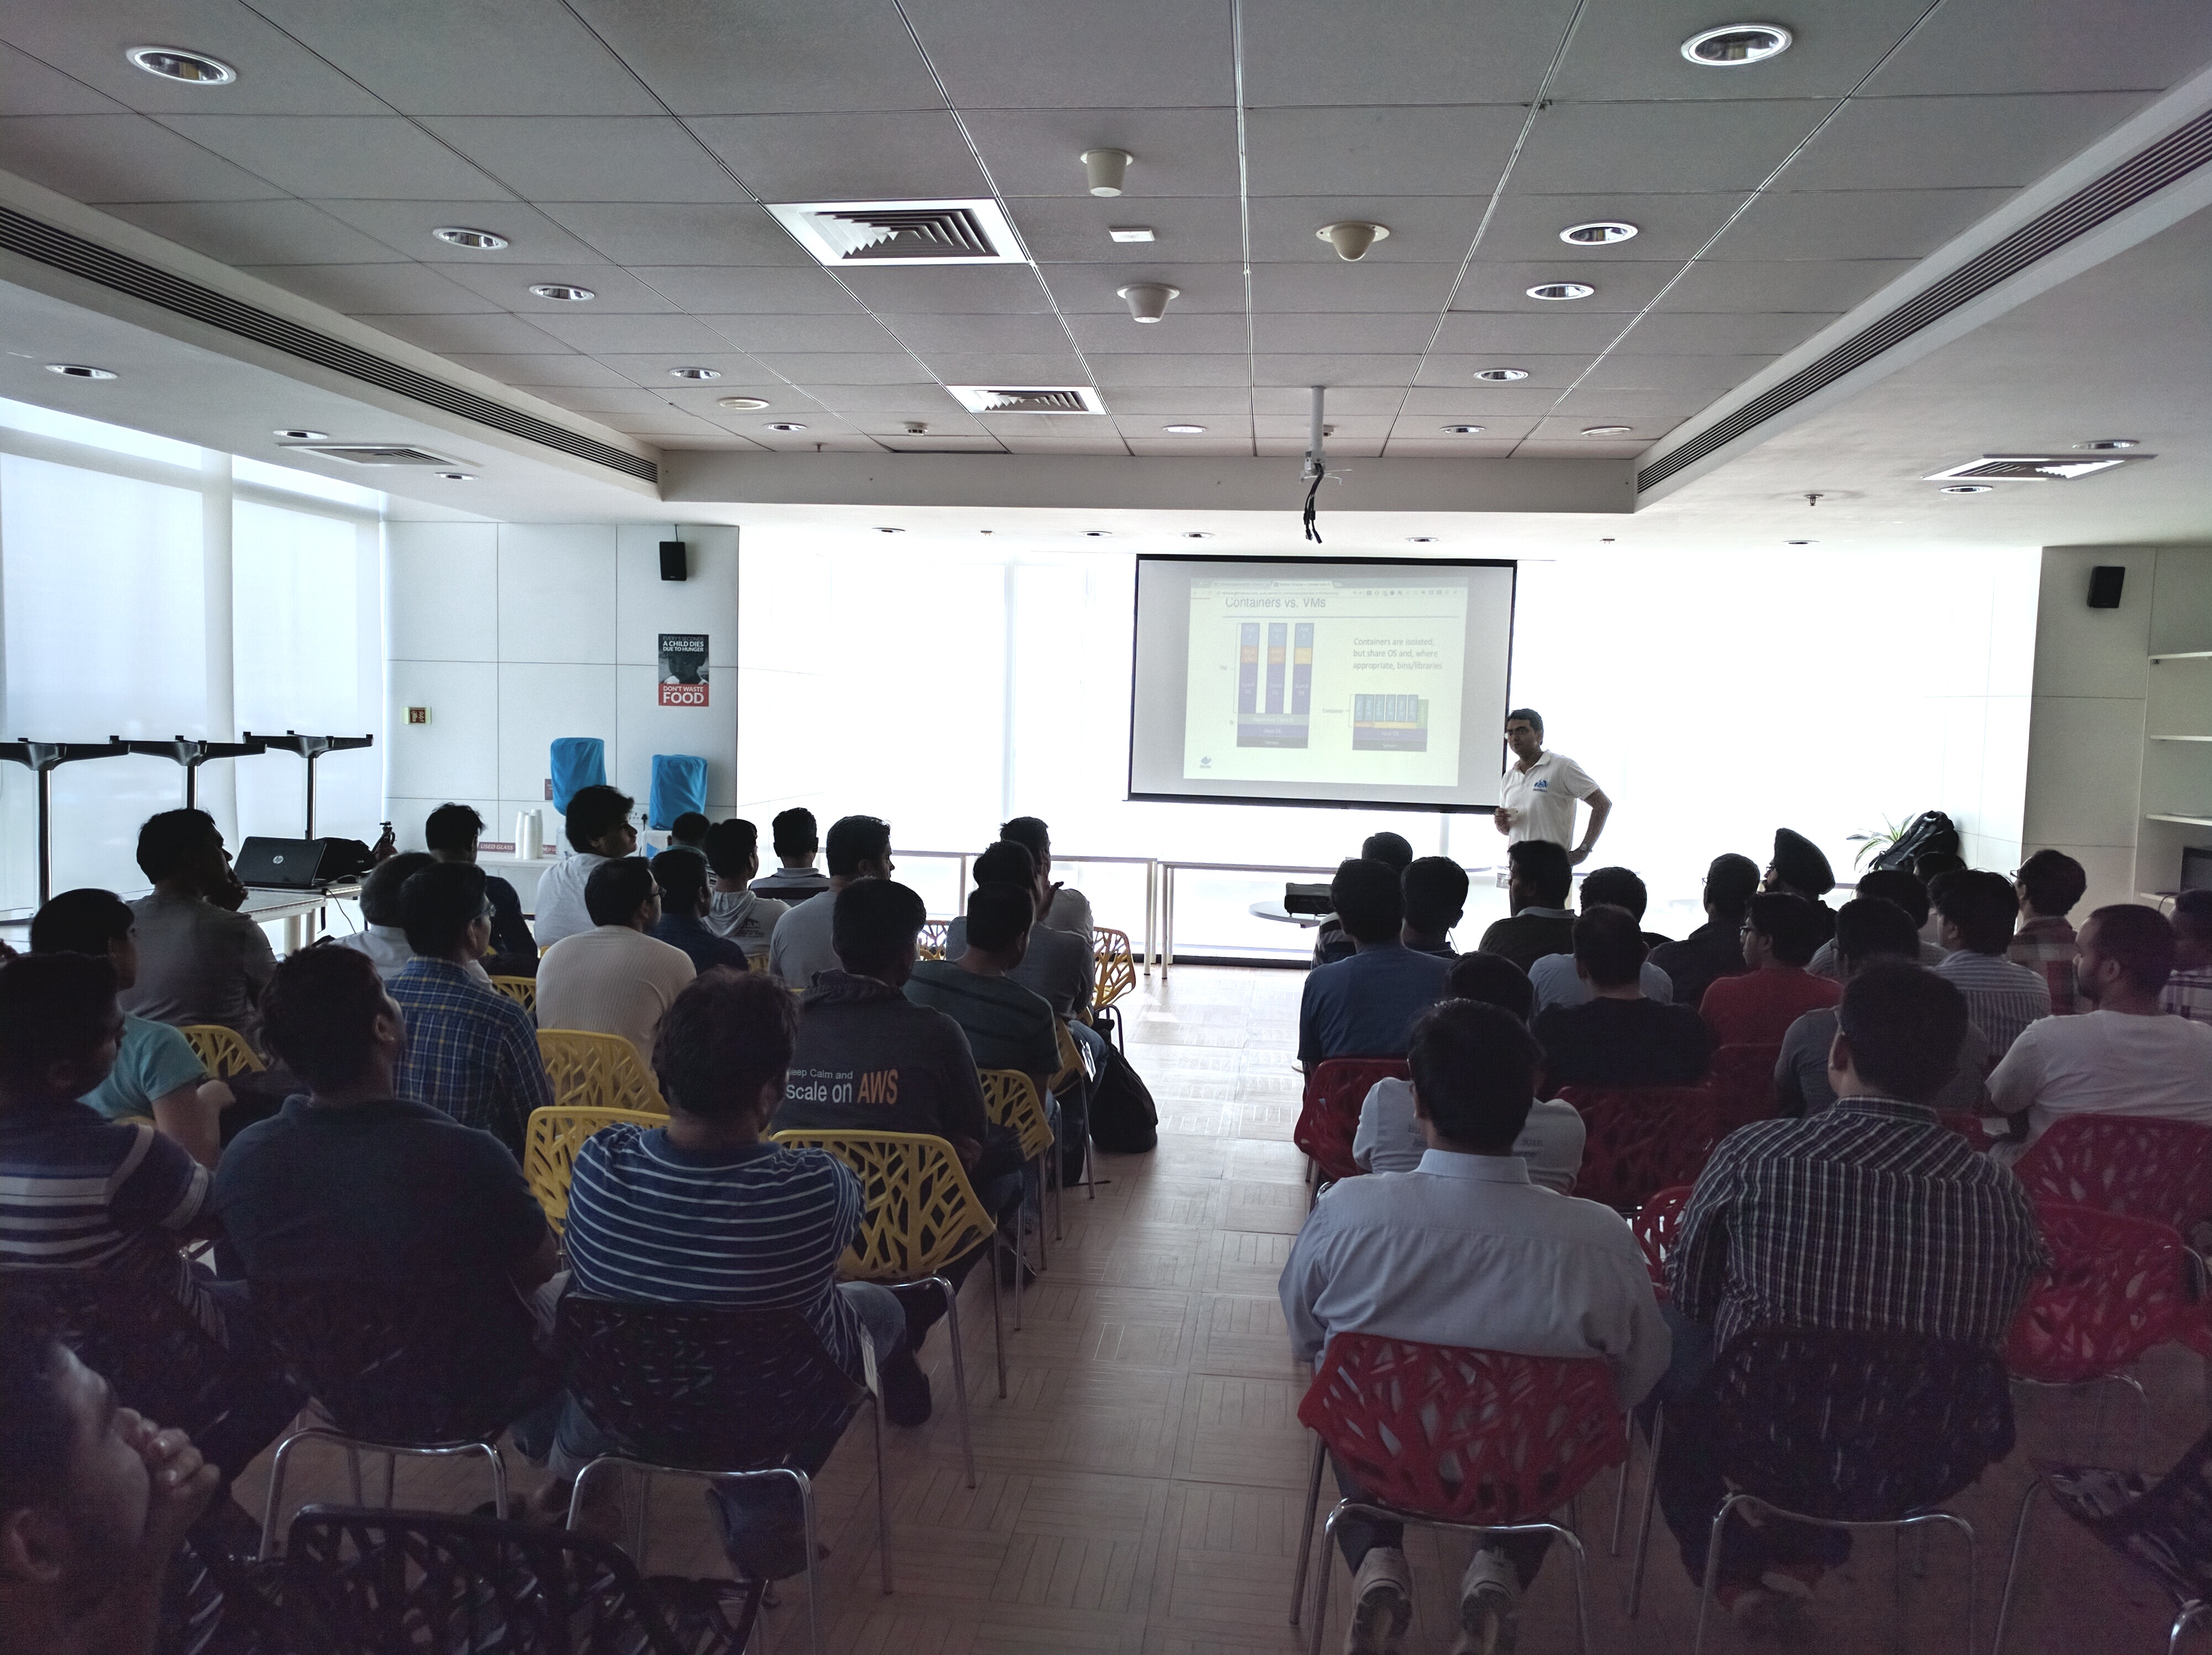 An account of Docker Meetup #22 in Bangalore